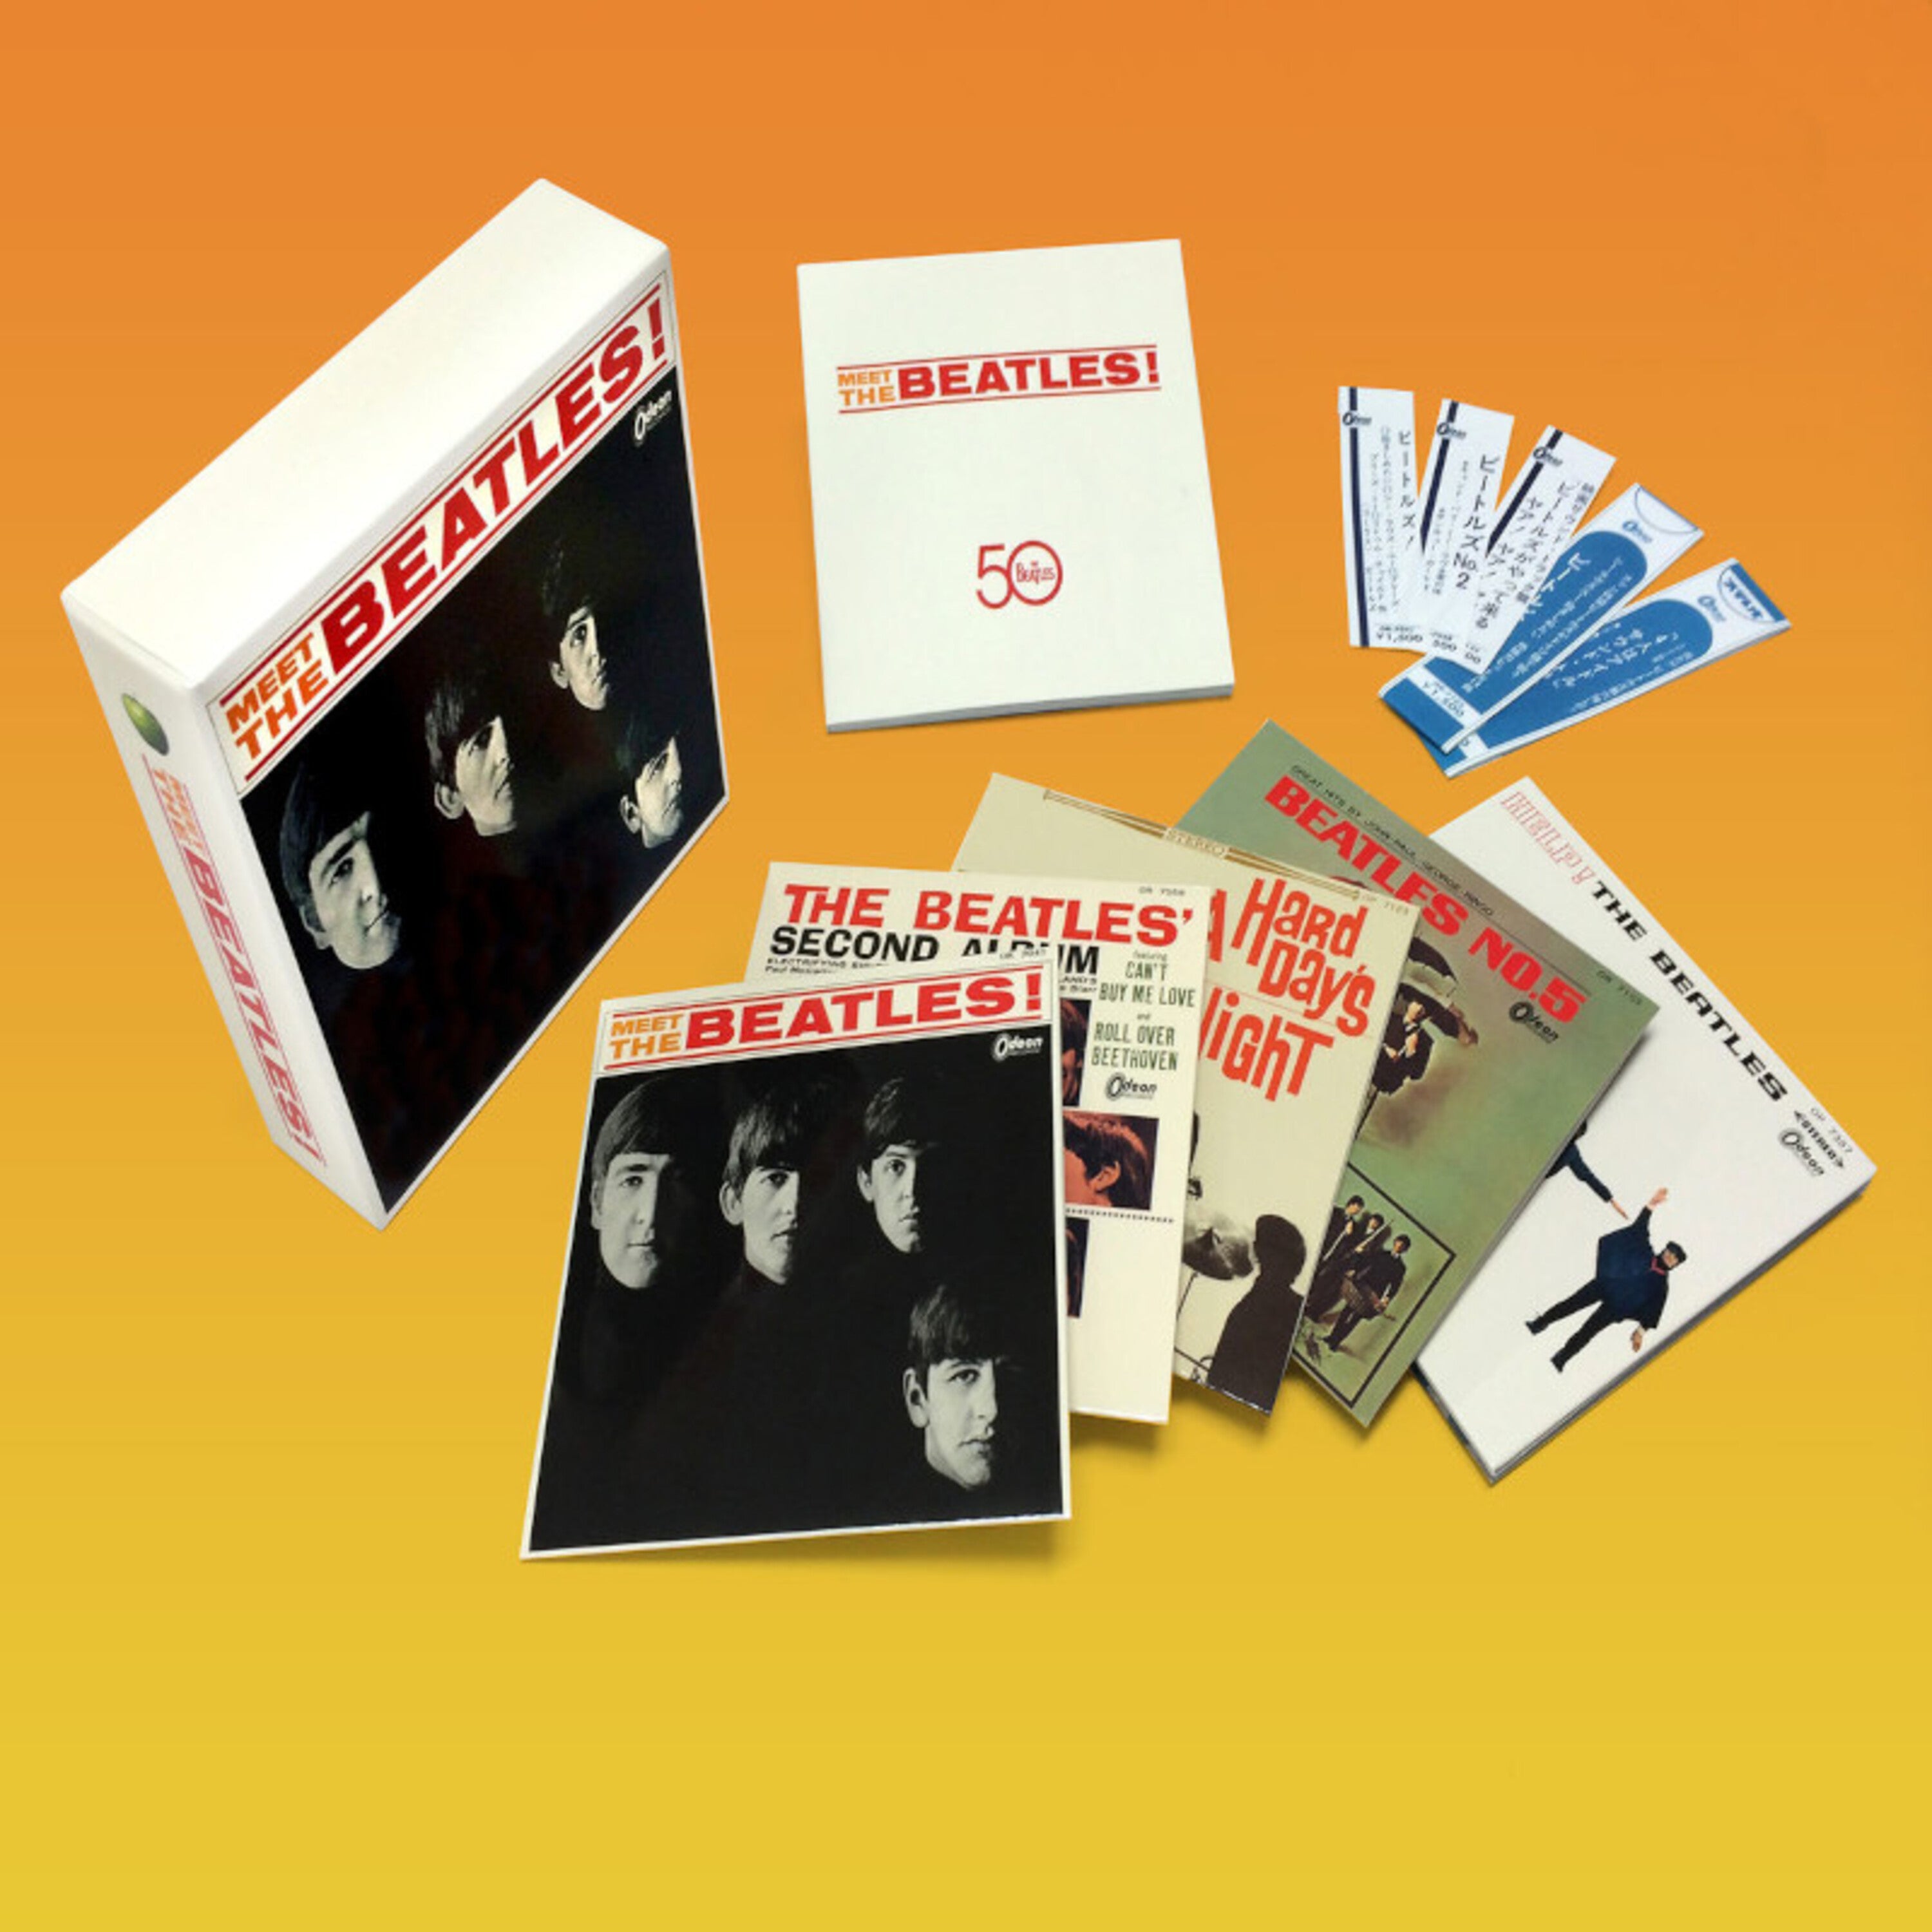 https://images.bravado.de/prod/product-assets/product-asset-data/beatles-the/the-beatles-international-1/products/139574/web/304613/image-thumb__304613__3000x3000_original/The-Beatles-Meet-The-Beatles-The-Japan-Box-CD-Box-mehrfarbig-139574-304613.jpg